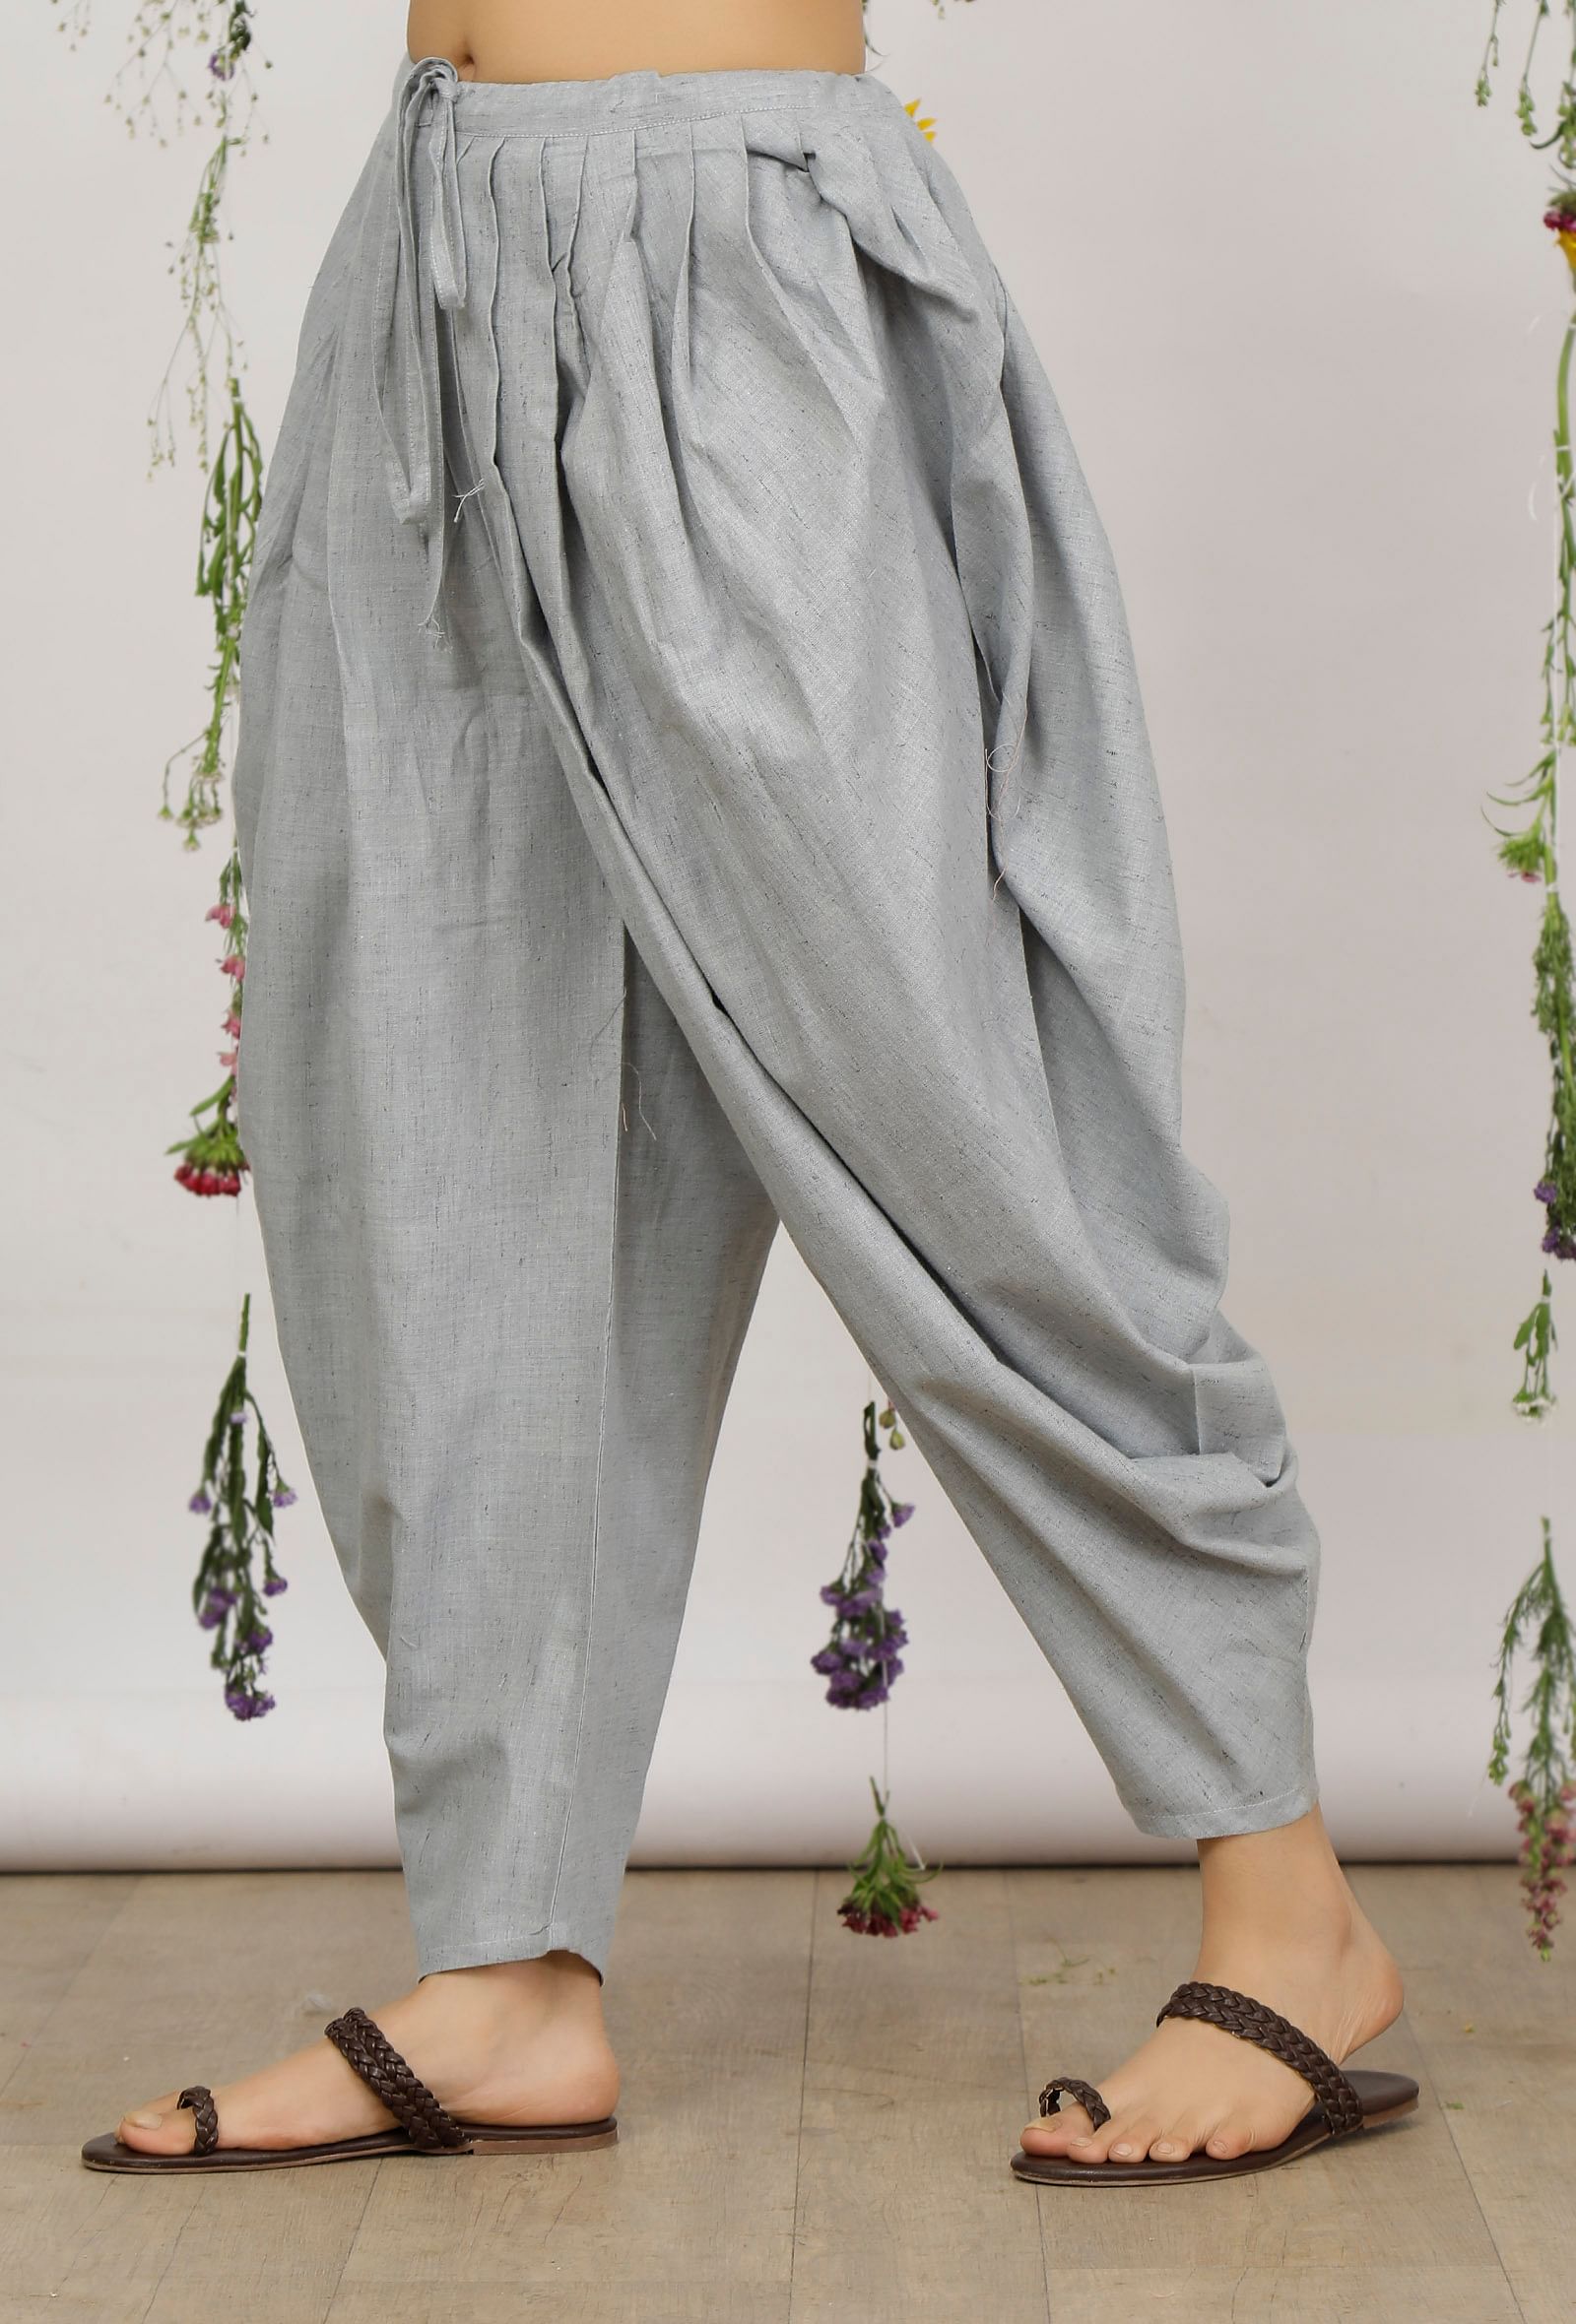 Mesmora khadi pc Women Printed Tulip Pants Machine wash Waist Size 320